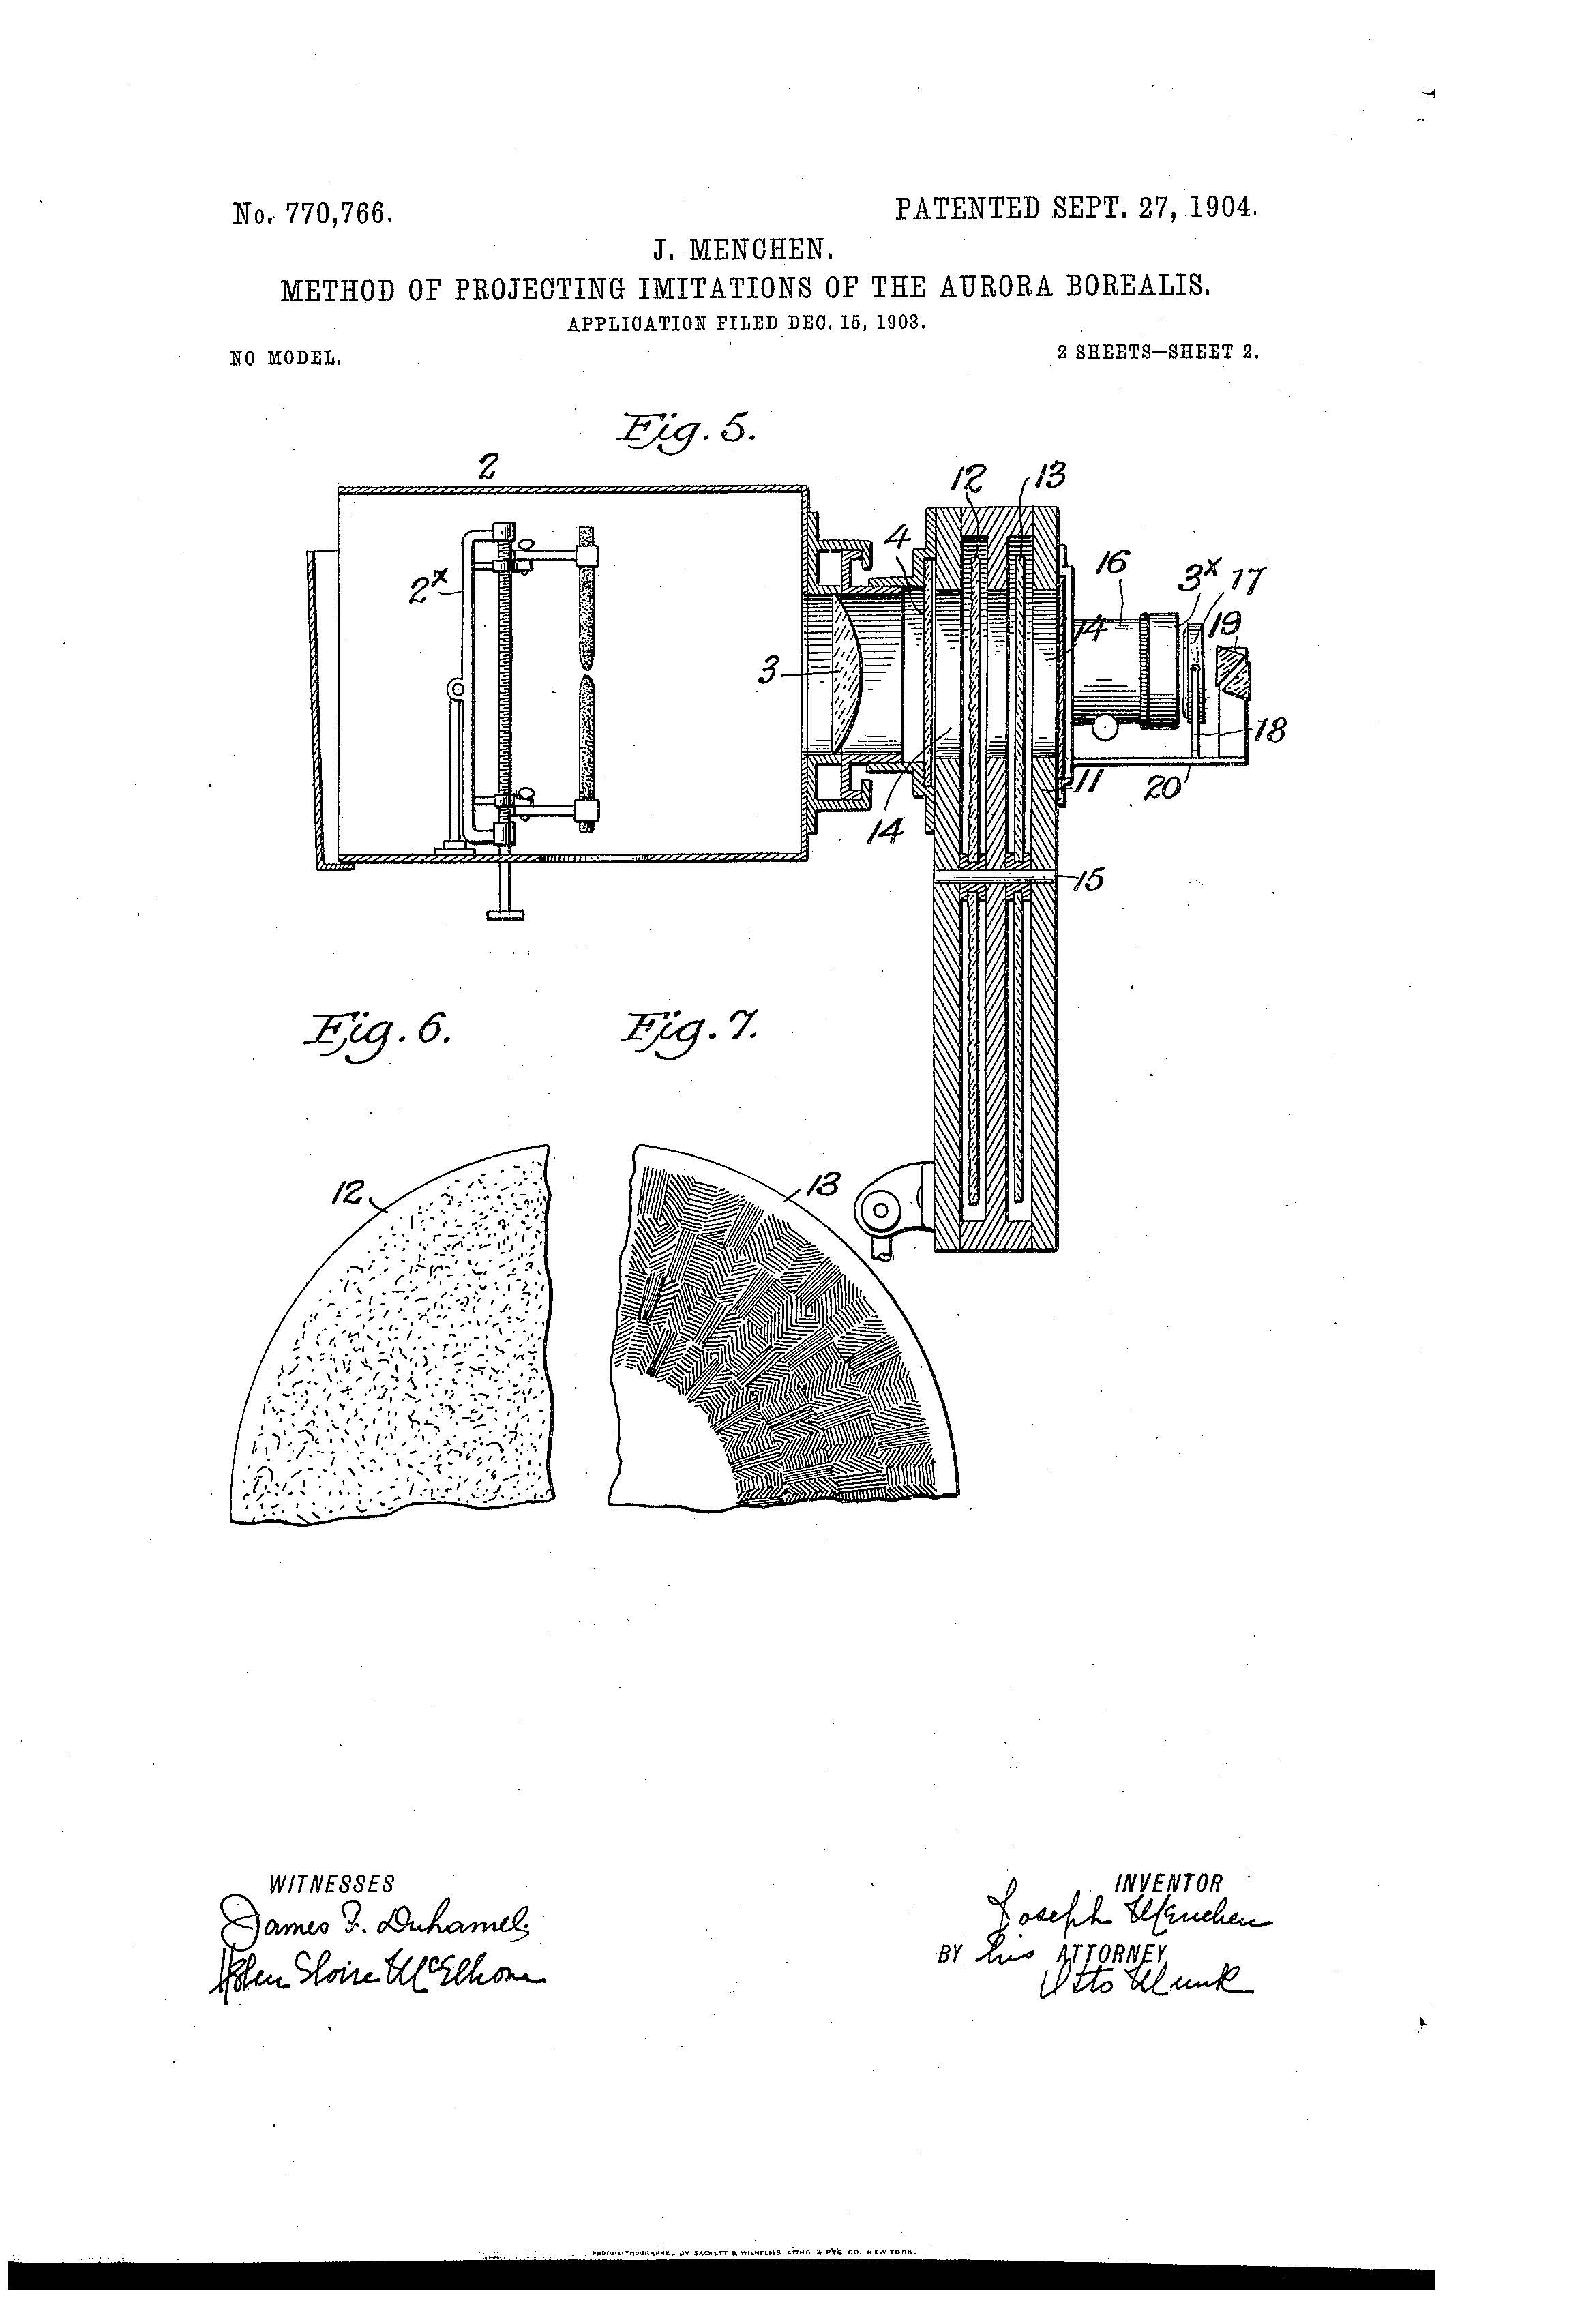 patent-illustration-imitation-aurora-borealis_page_2